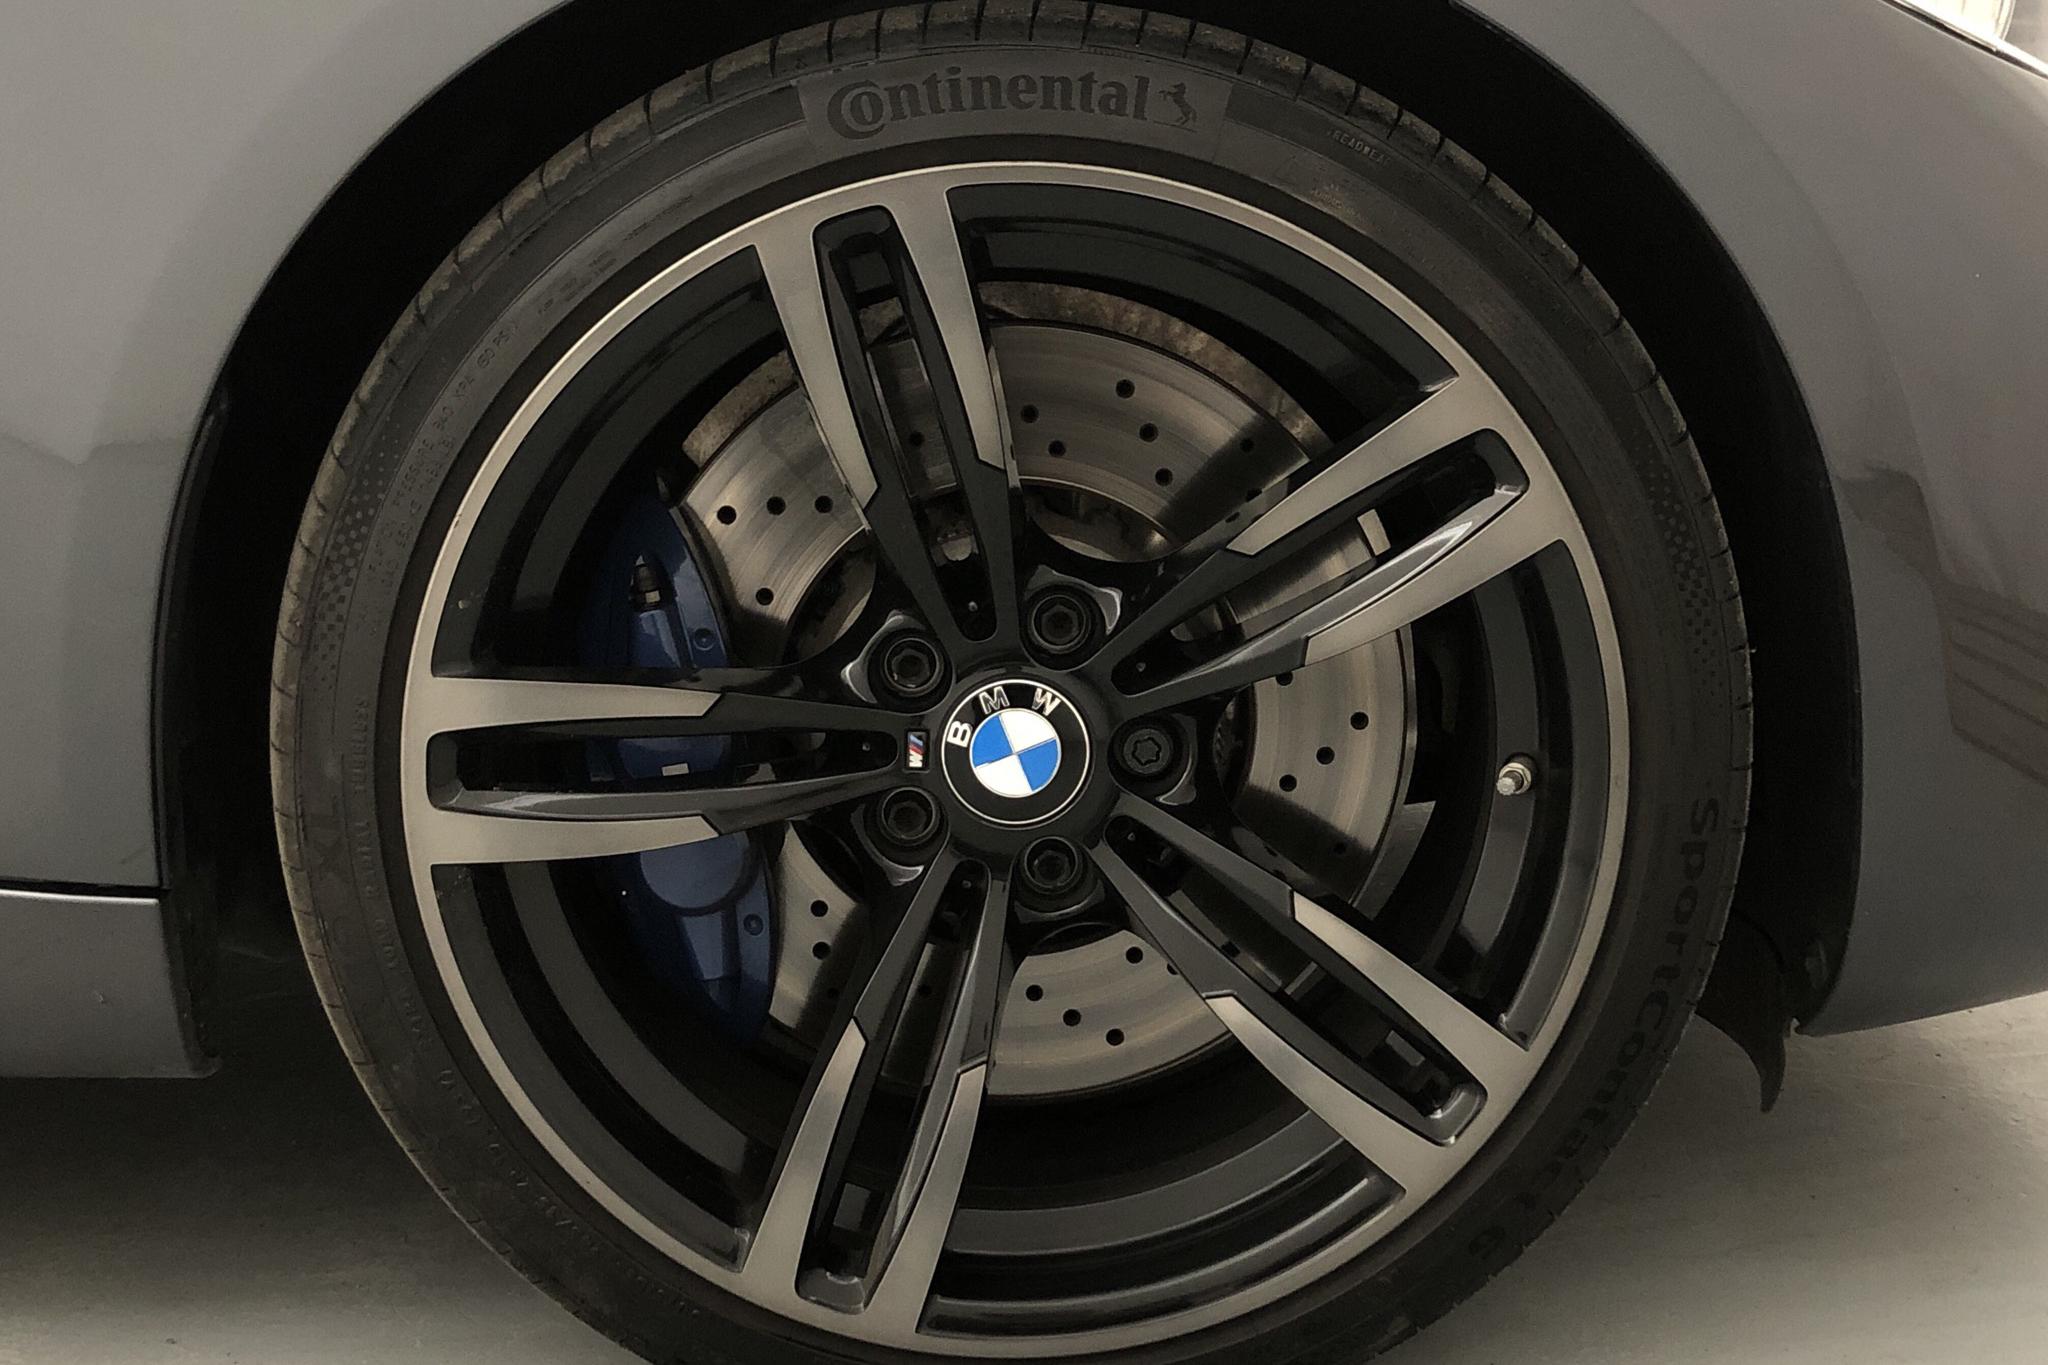 BMW M2 Coupé, F87 (370hk) - 42 020 km - Automatic - gray - 2017